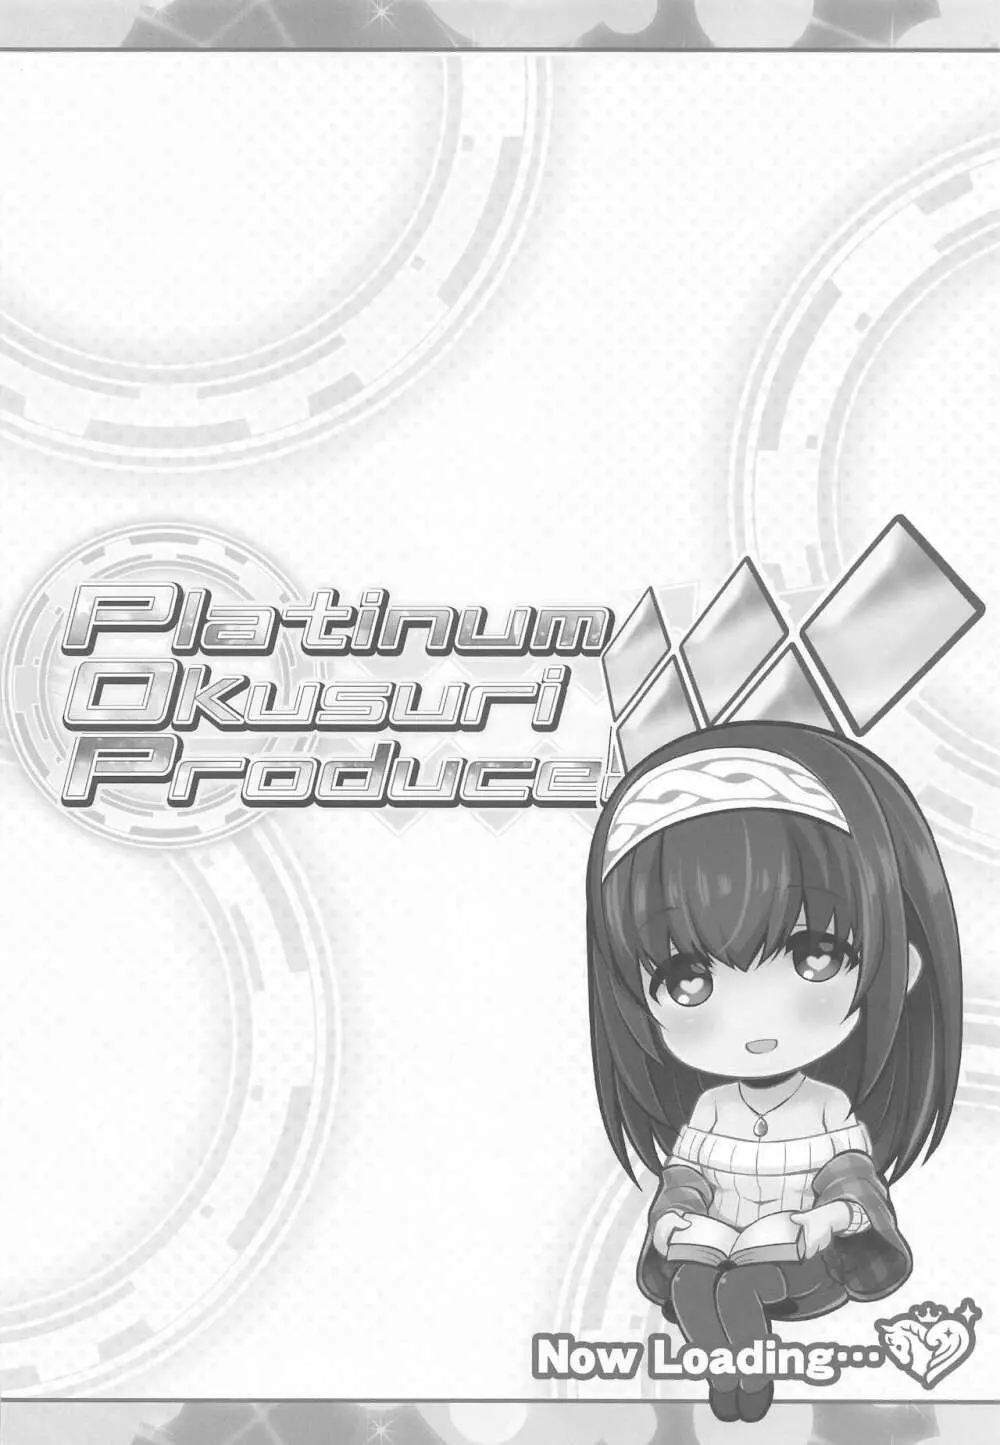 Platinum Okusuri Produce!!!! ◇◇◇◇◇ - page3